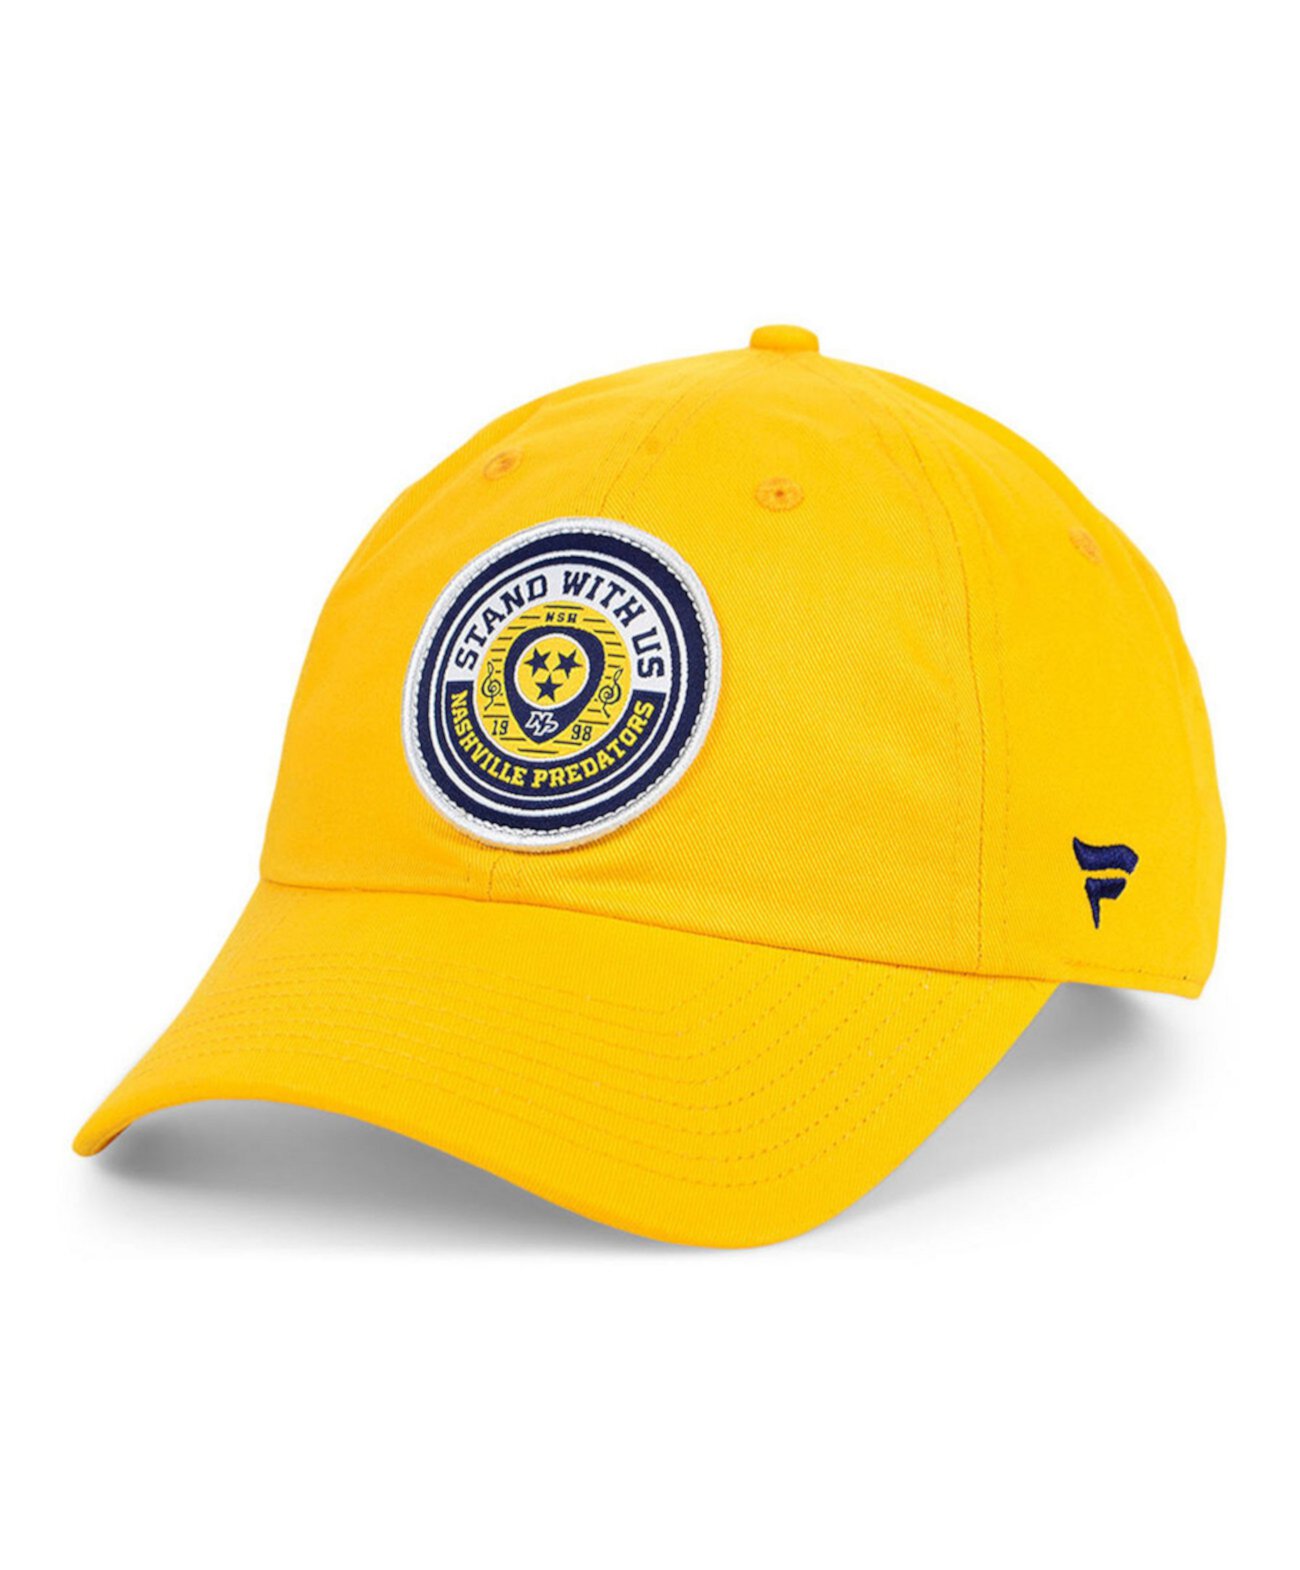 Регулируемая кепка Nashville Predators Hometown Relaxed регулируемая Authentic NHL Headwear